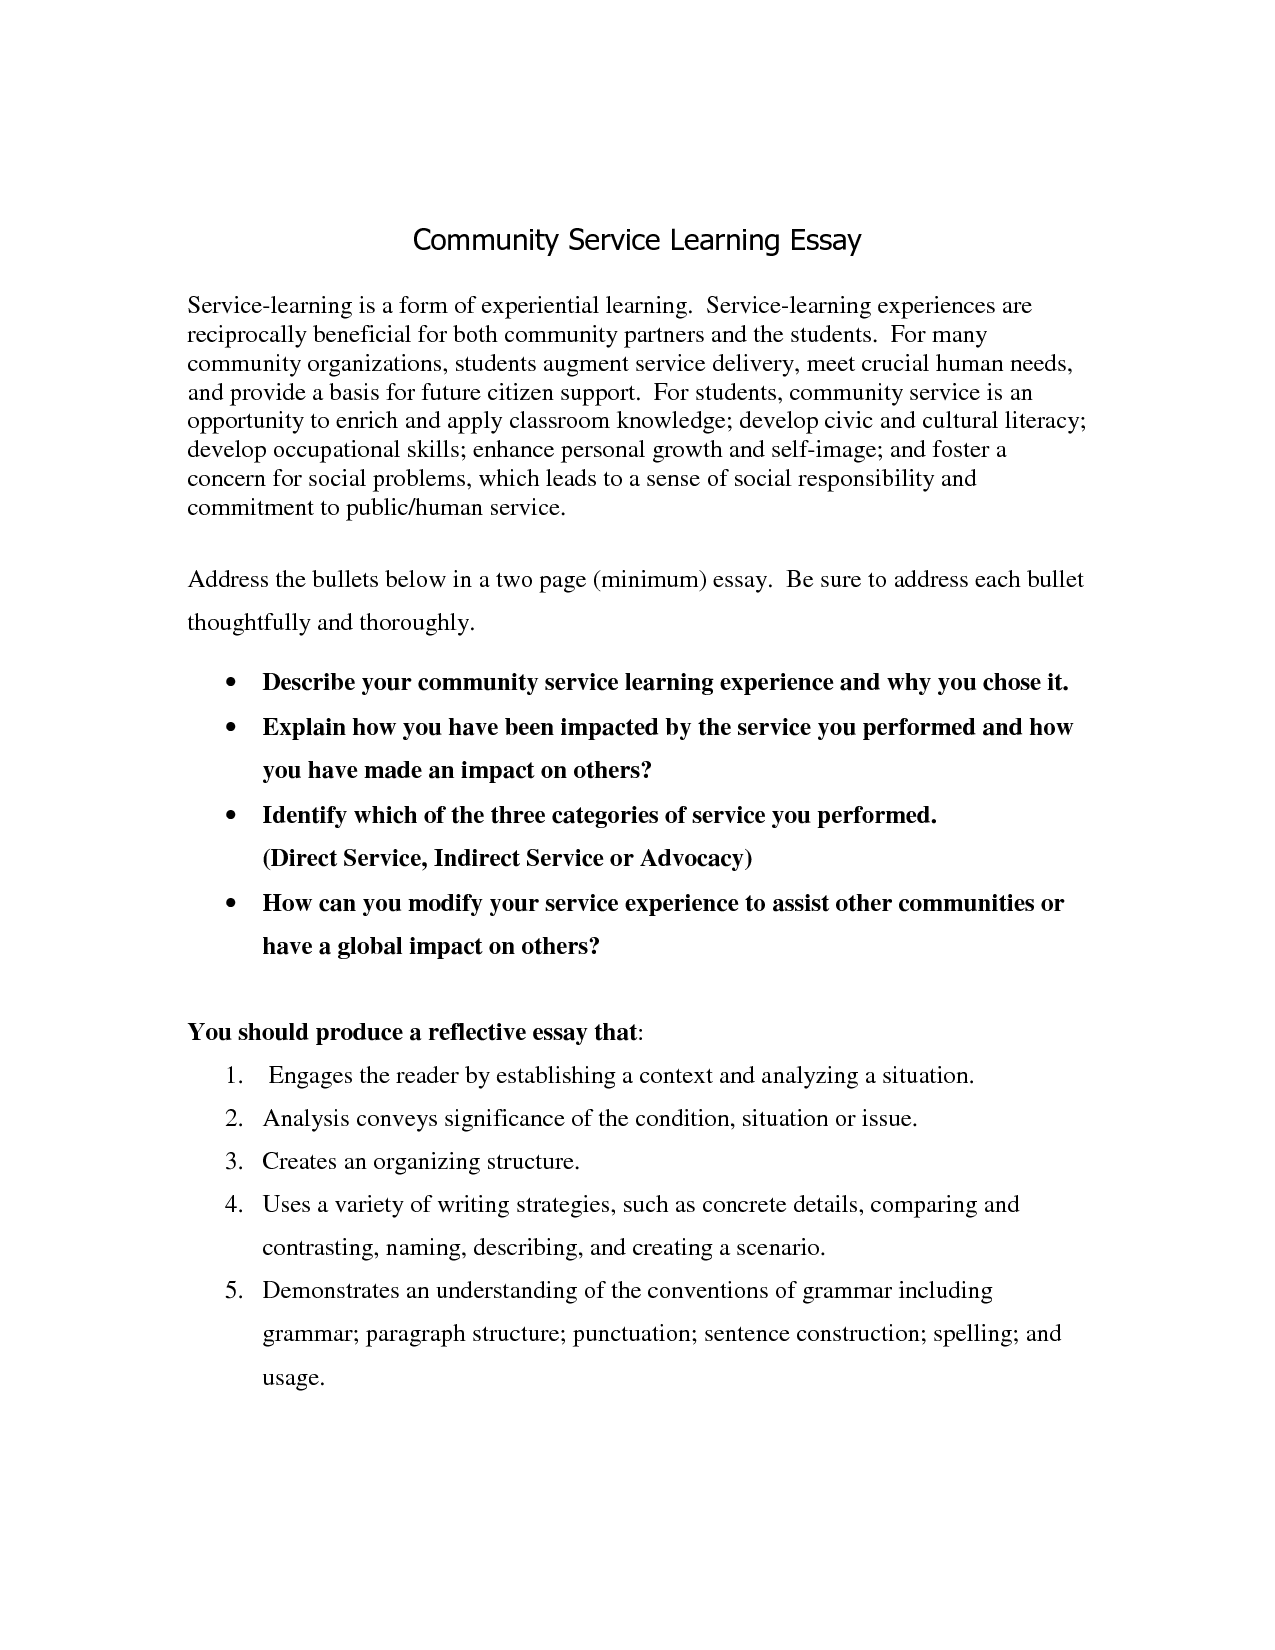 Community service essay student essays